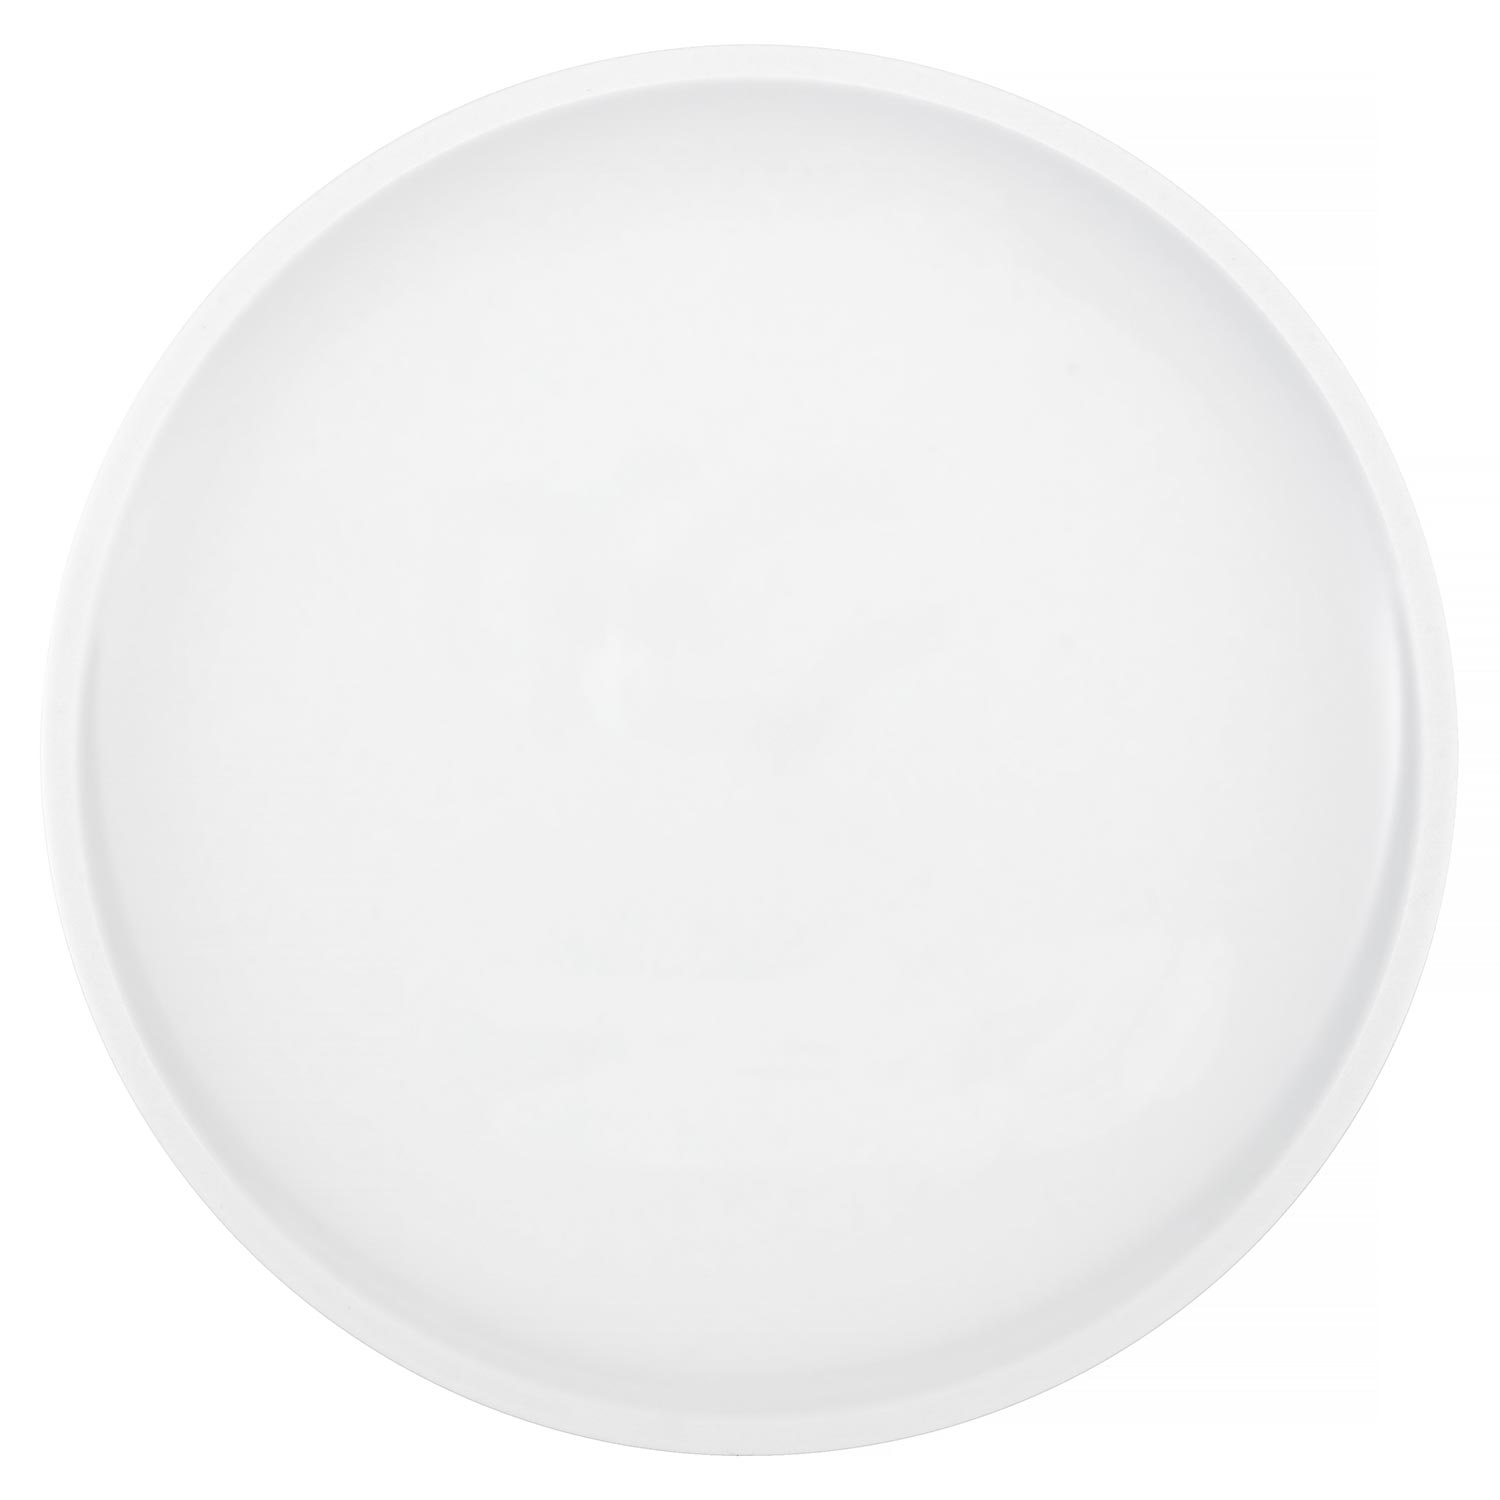 Artesano Original Плоская тарелка 27 см